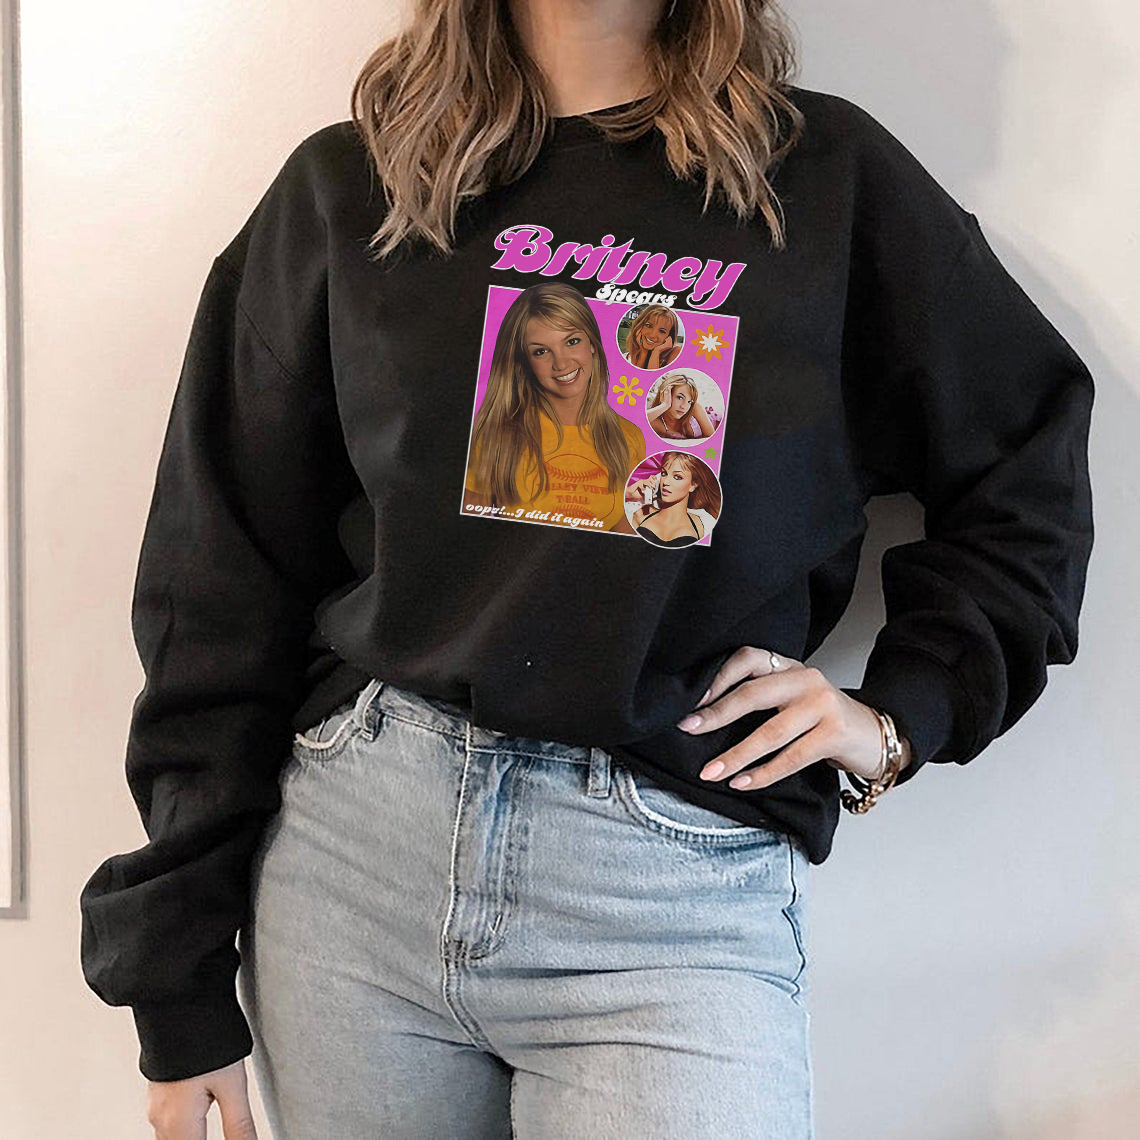 Britney Spears 90s vintage shirt